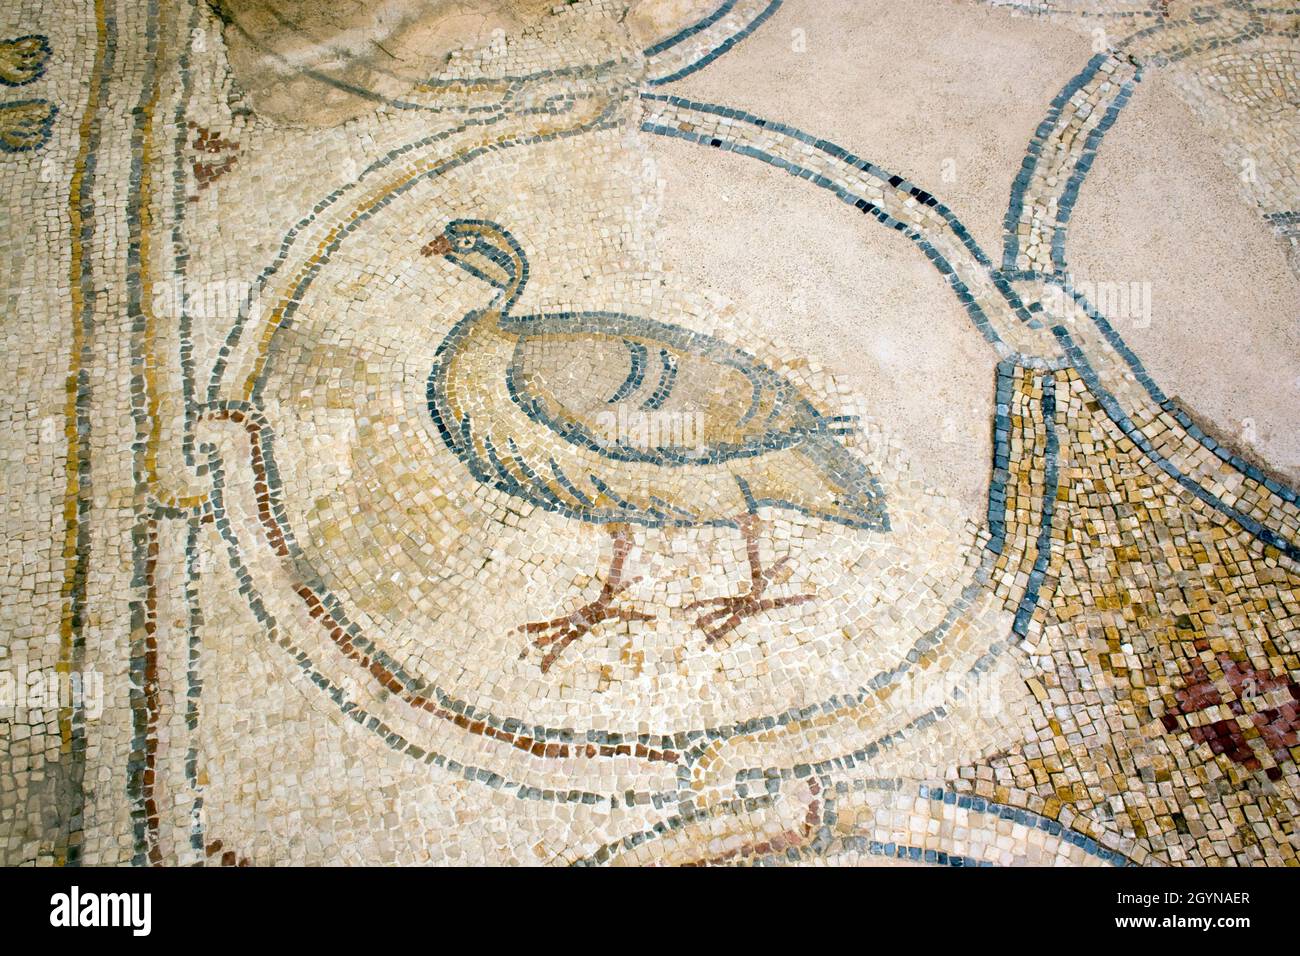 Chukar partridge in Mosaic  Birds Mosaic is a Byzantine mosaic floor discovered in Caesarea, Israel. Caesarea Maritima also known as Caesarea Palestin Stock Photo